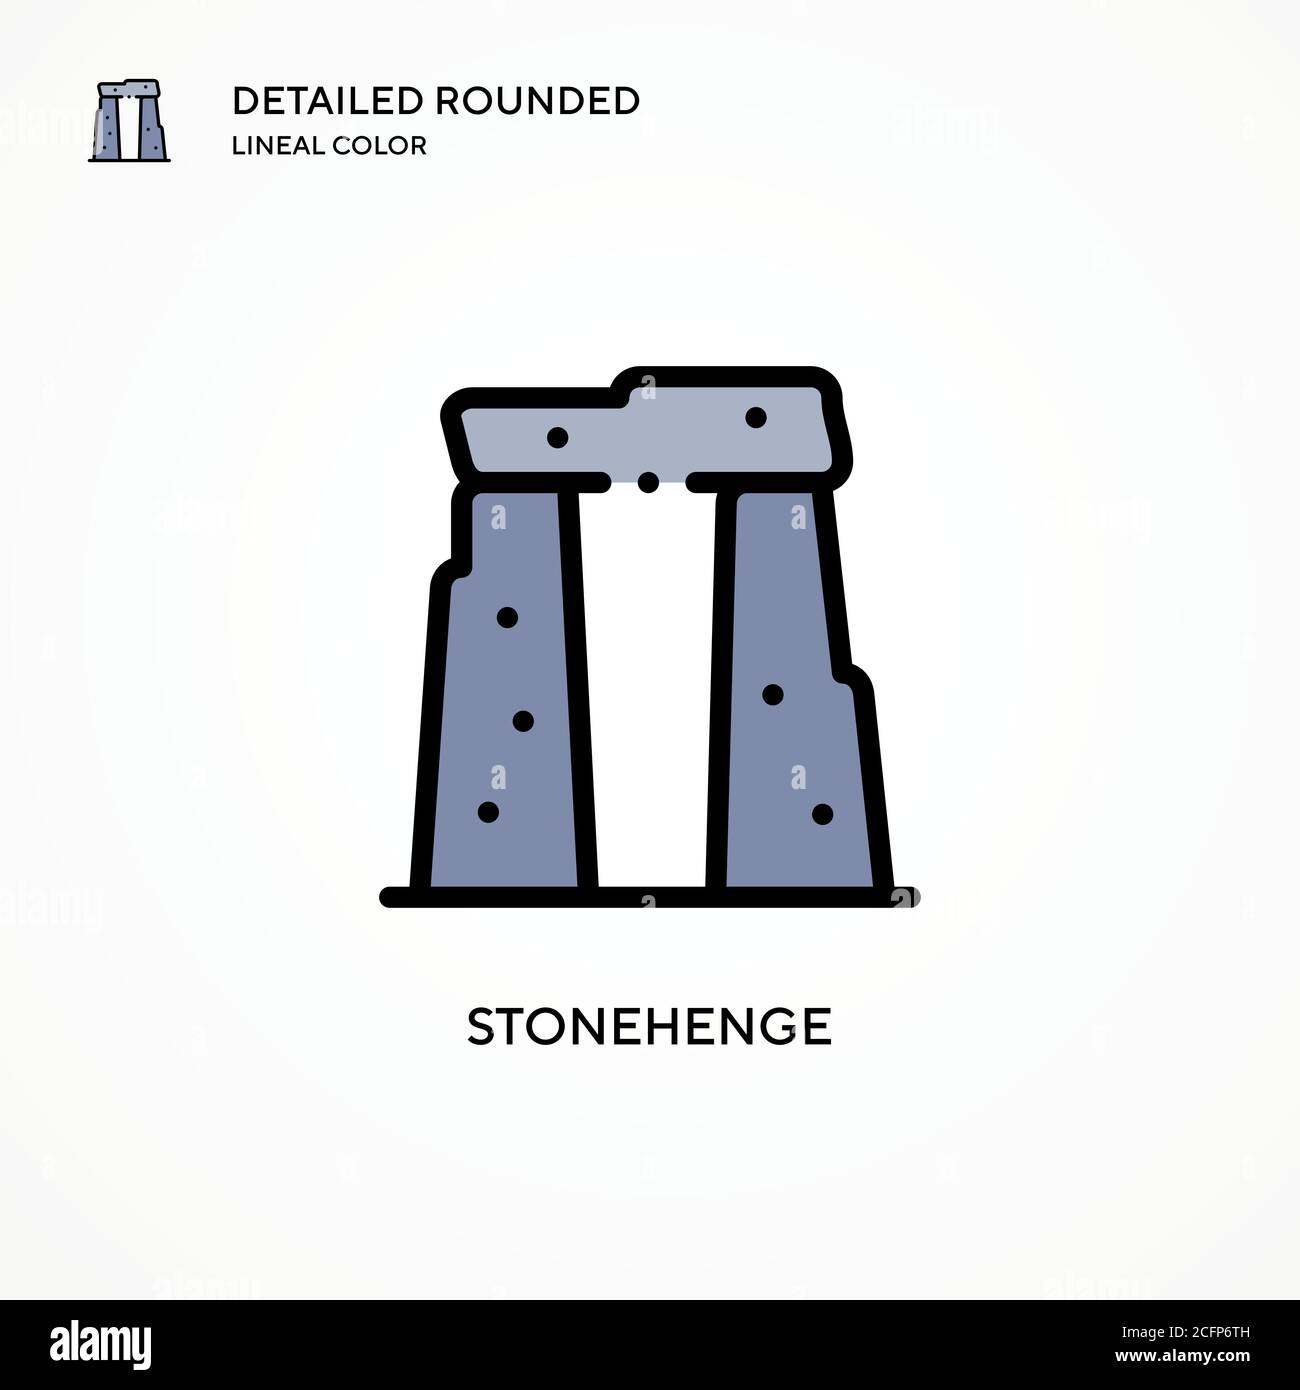 Stonehenge Vektor-Symbol. Moderne Vektorgrafik Konzepte. Einfach zu bearbeiten und anzupassen. Stock Vektor